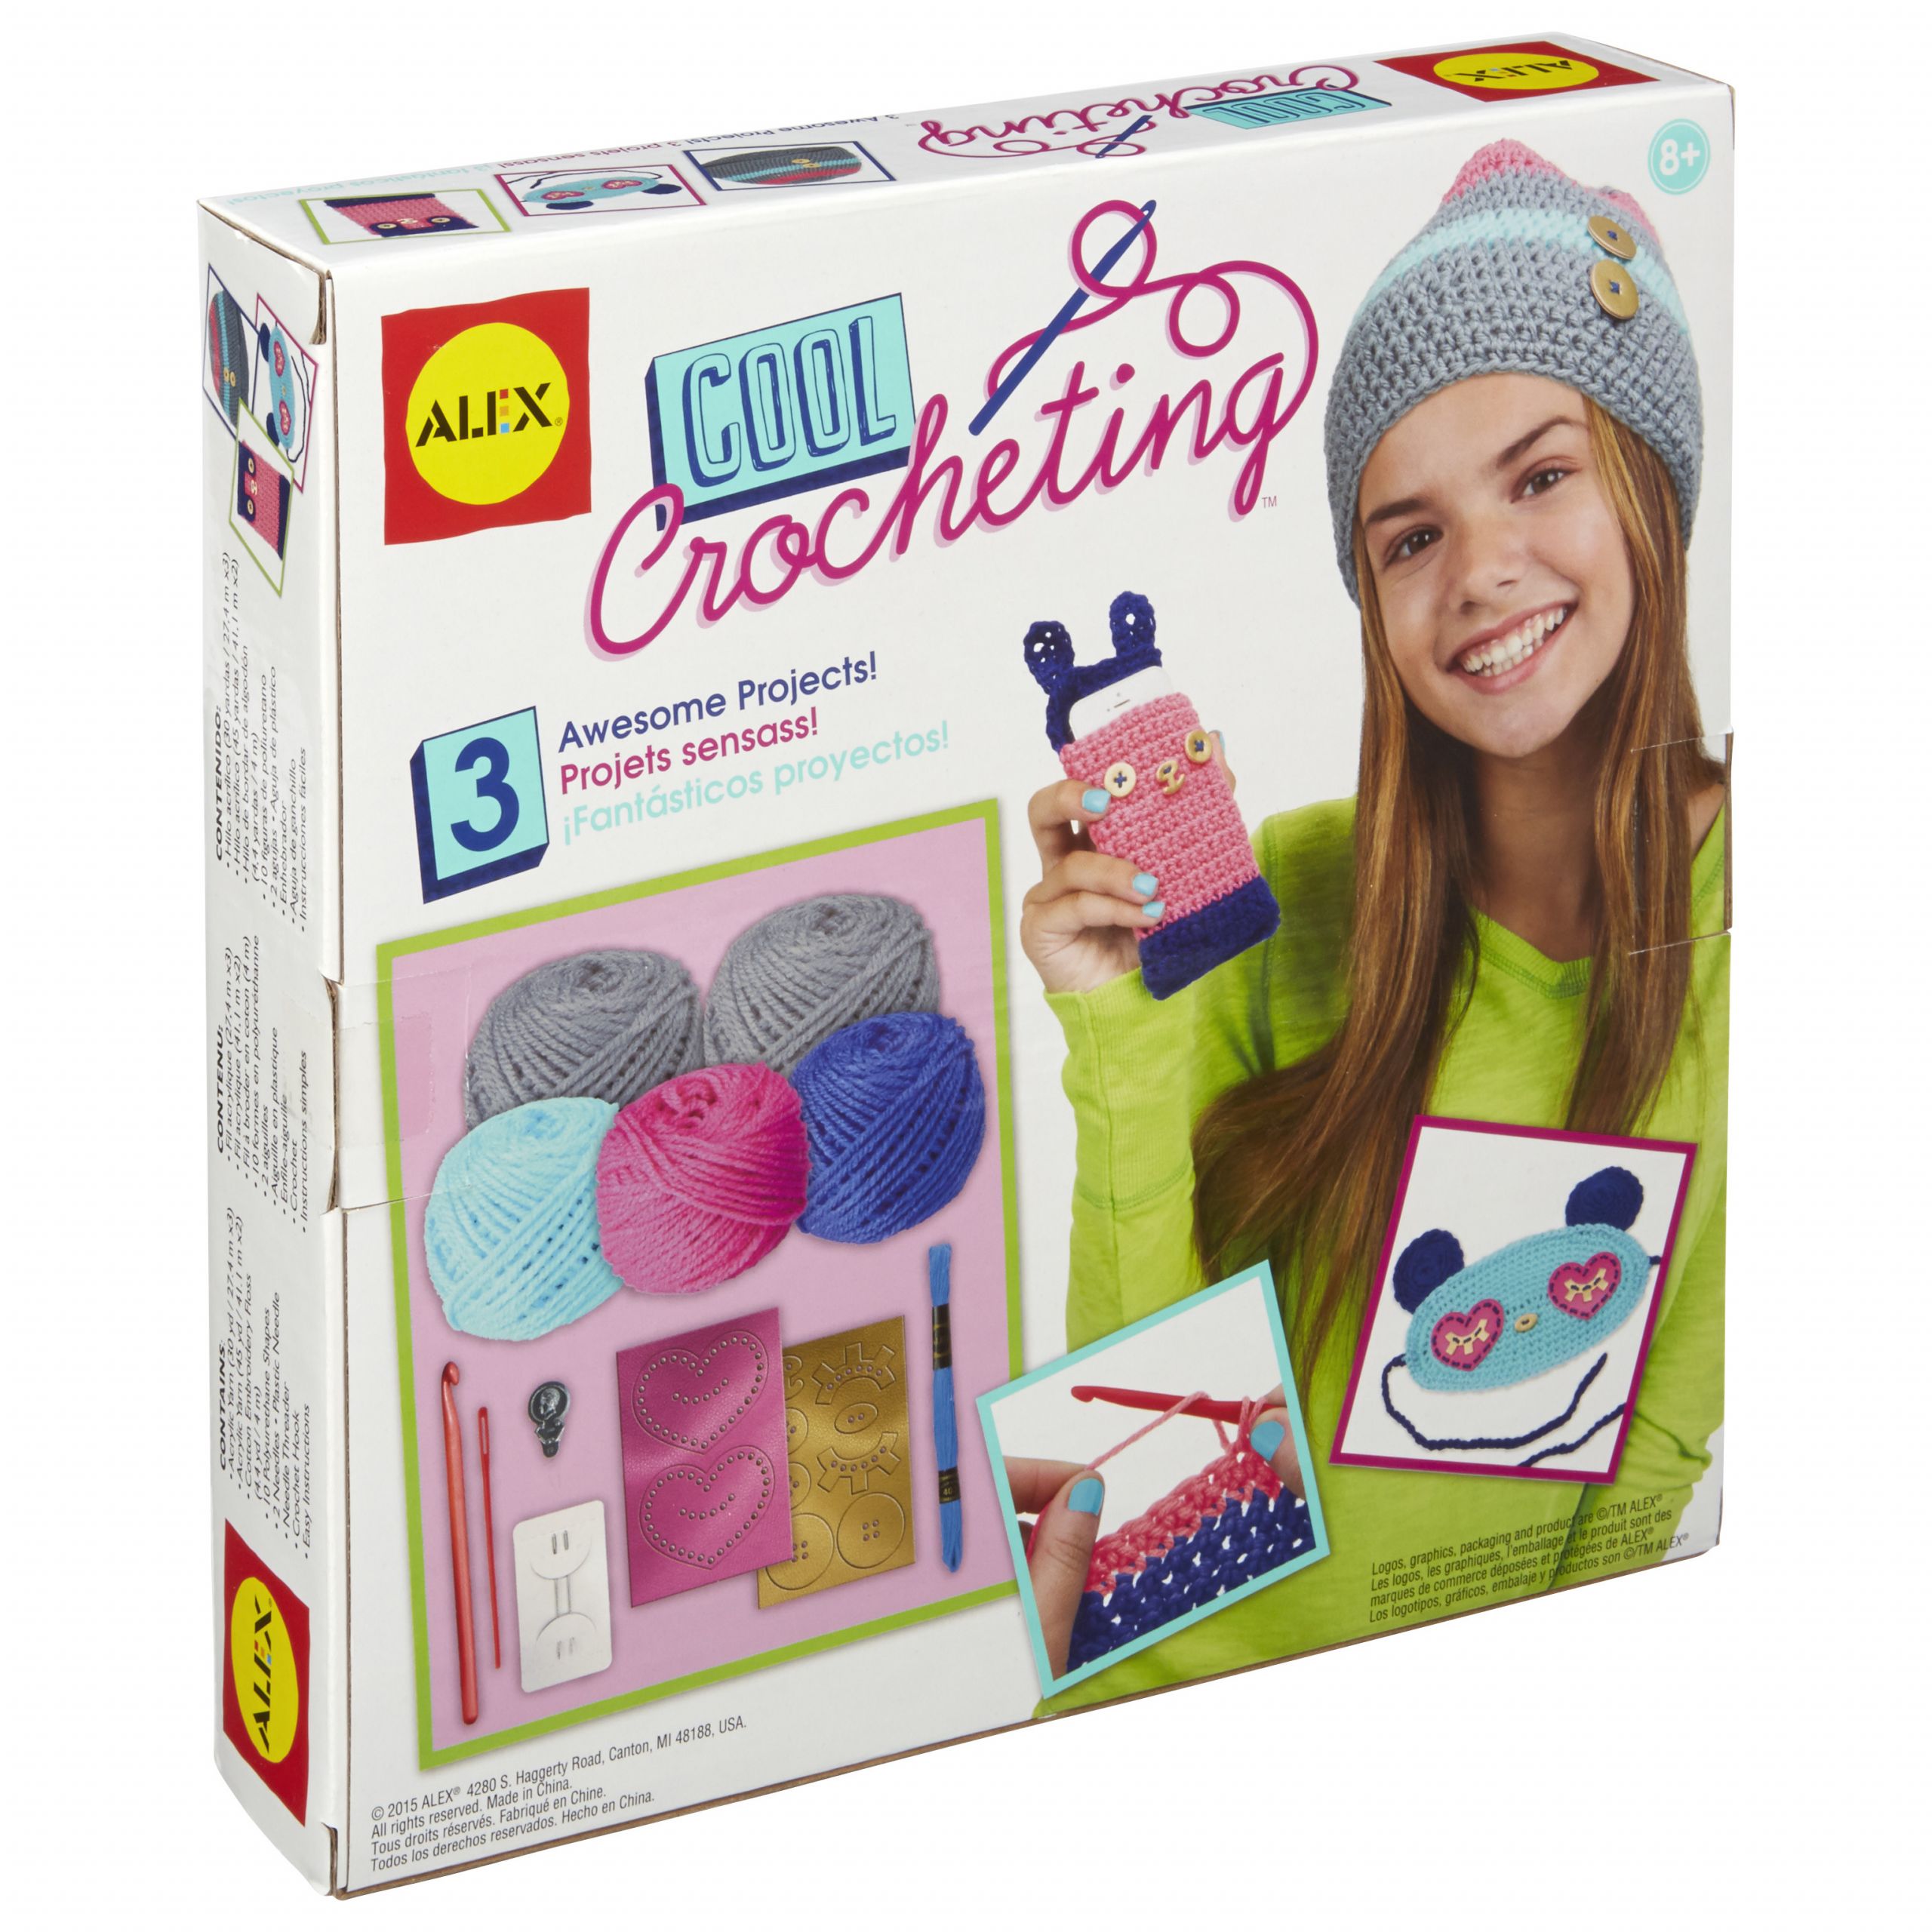 Cool Craft Kits
 ALEX Toys Craft Cool Crocheting Kit AlexBrands